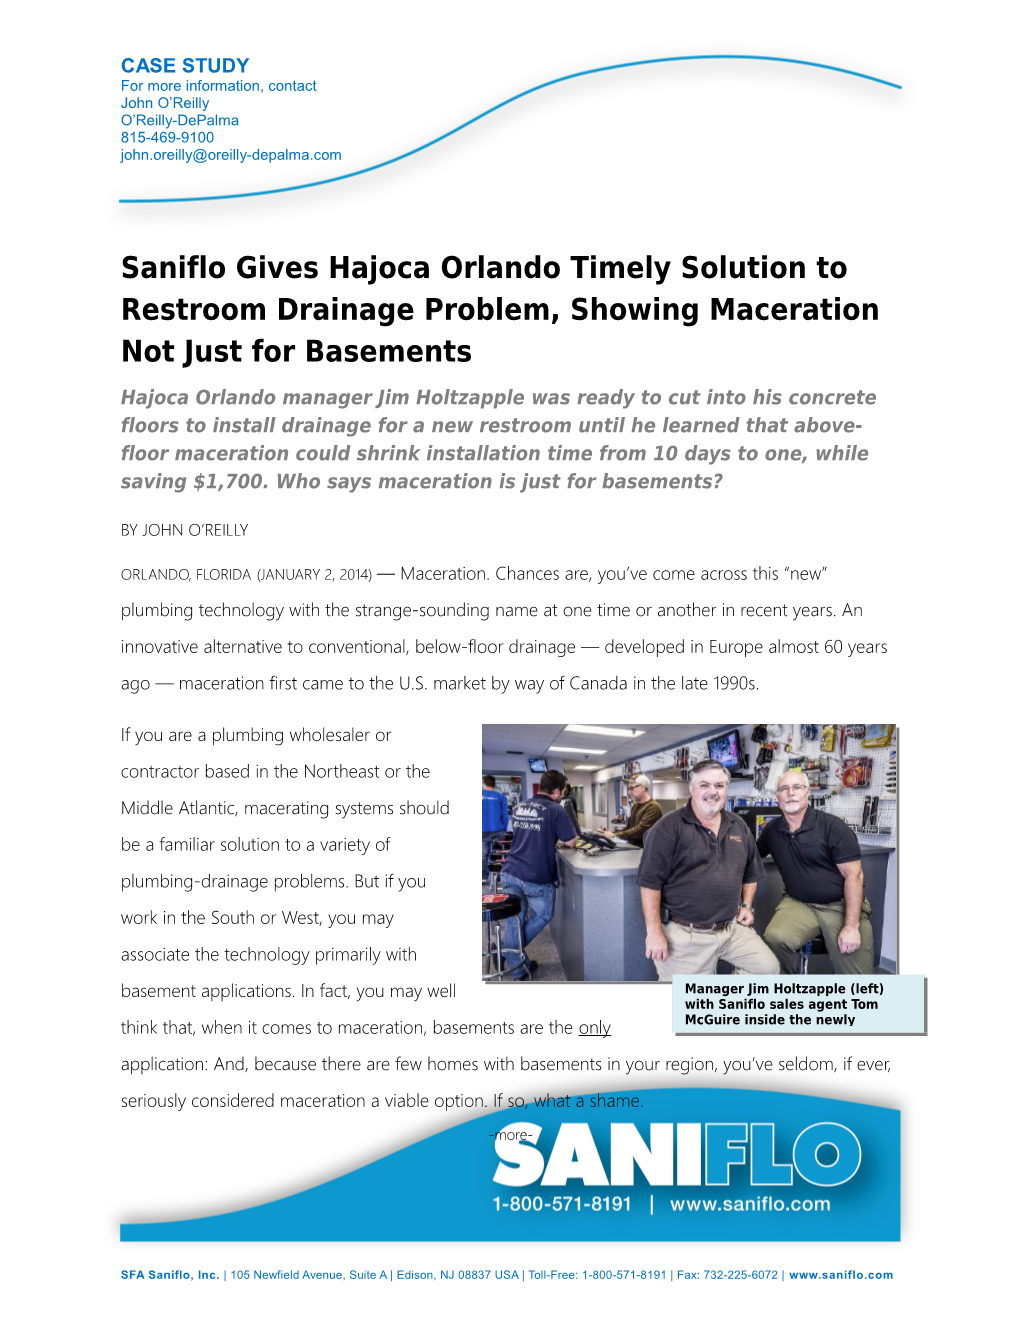 Saniflo Case Study: Hajoca Orlando Saves $1,700 with Macerating System Page 1 of 5